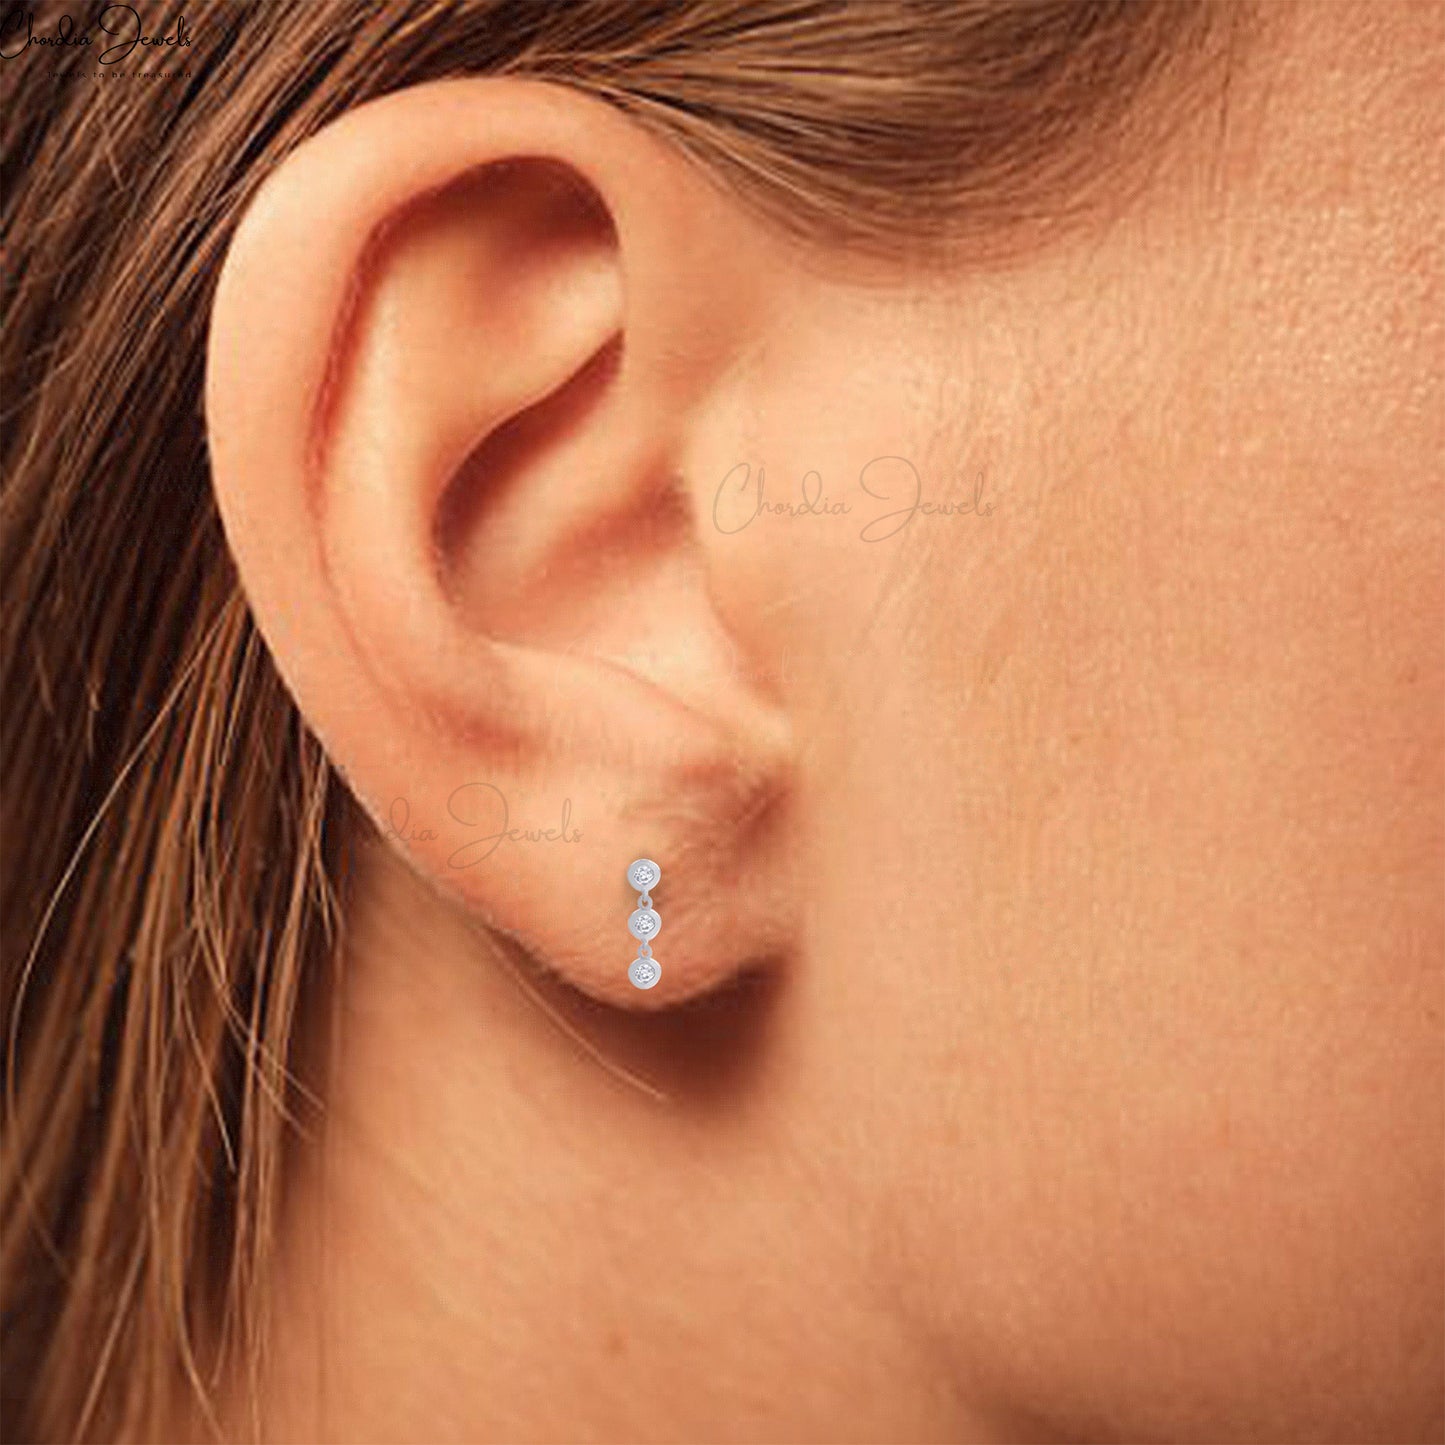 White Diamond Dangling Earrings 14k Solid White Gold Earrings 2.1mm Round Cut Earrings For Her